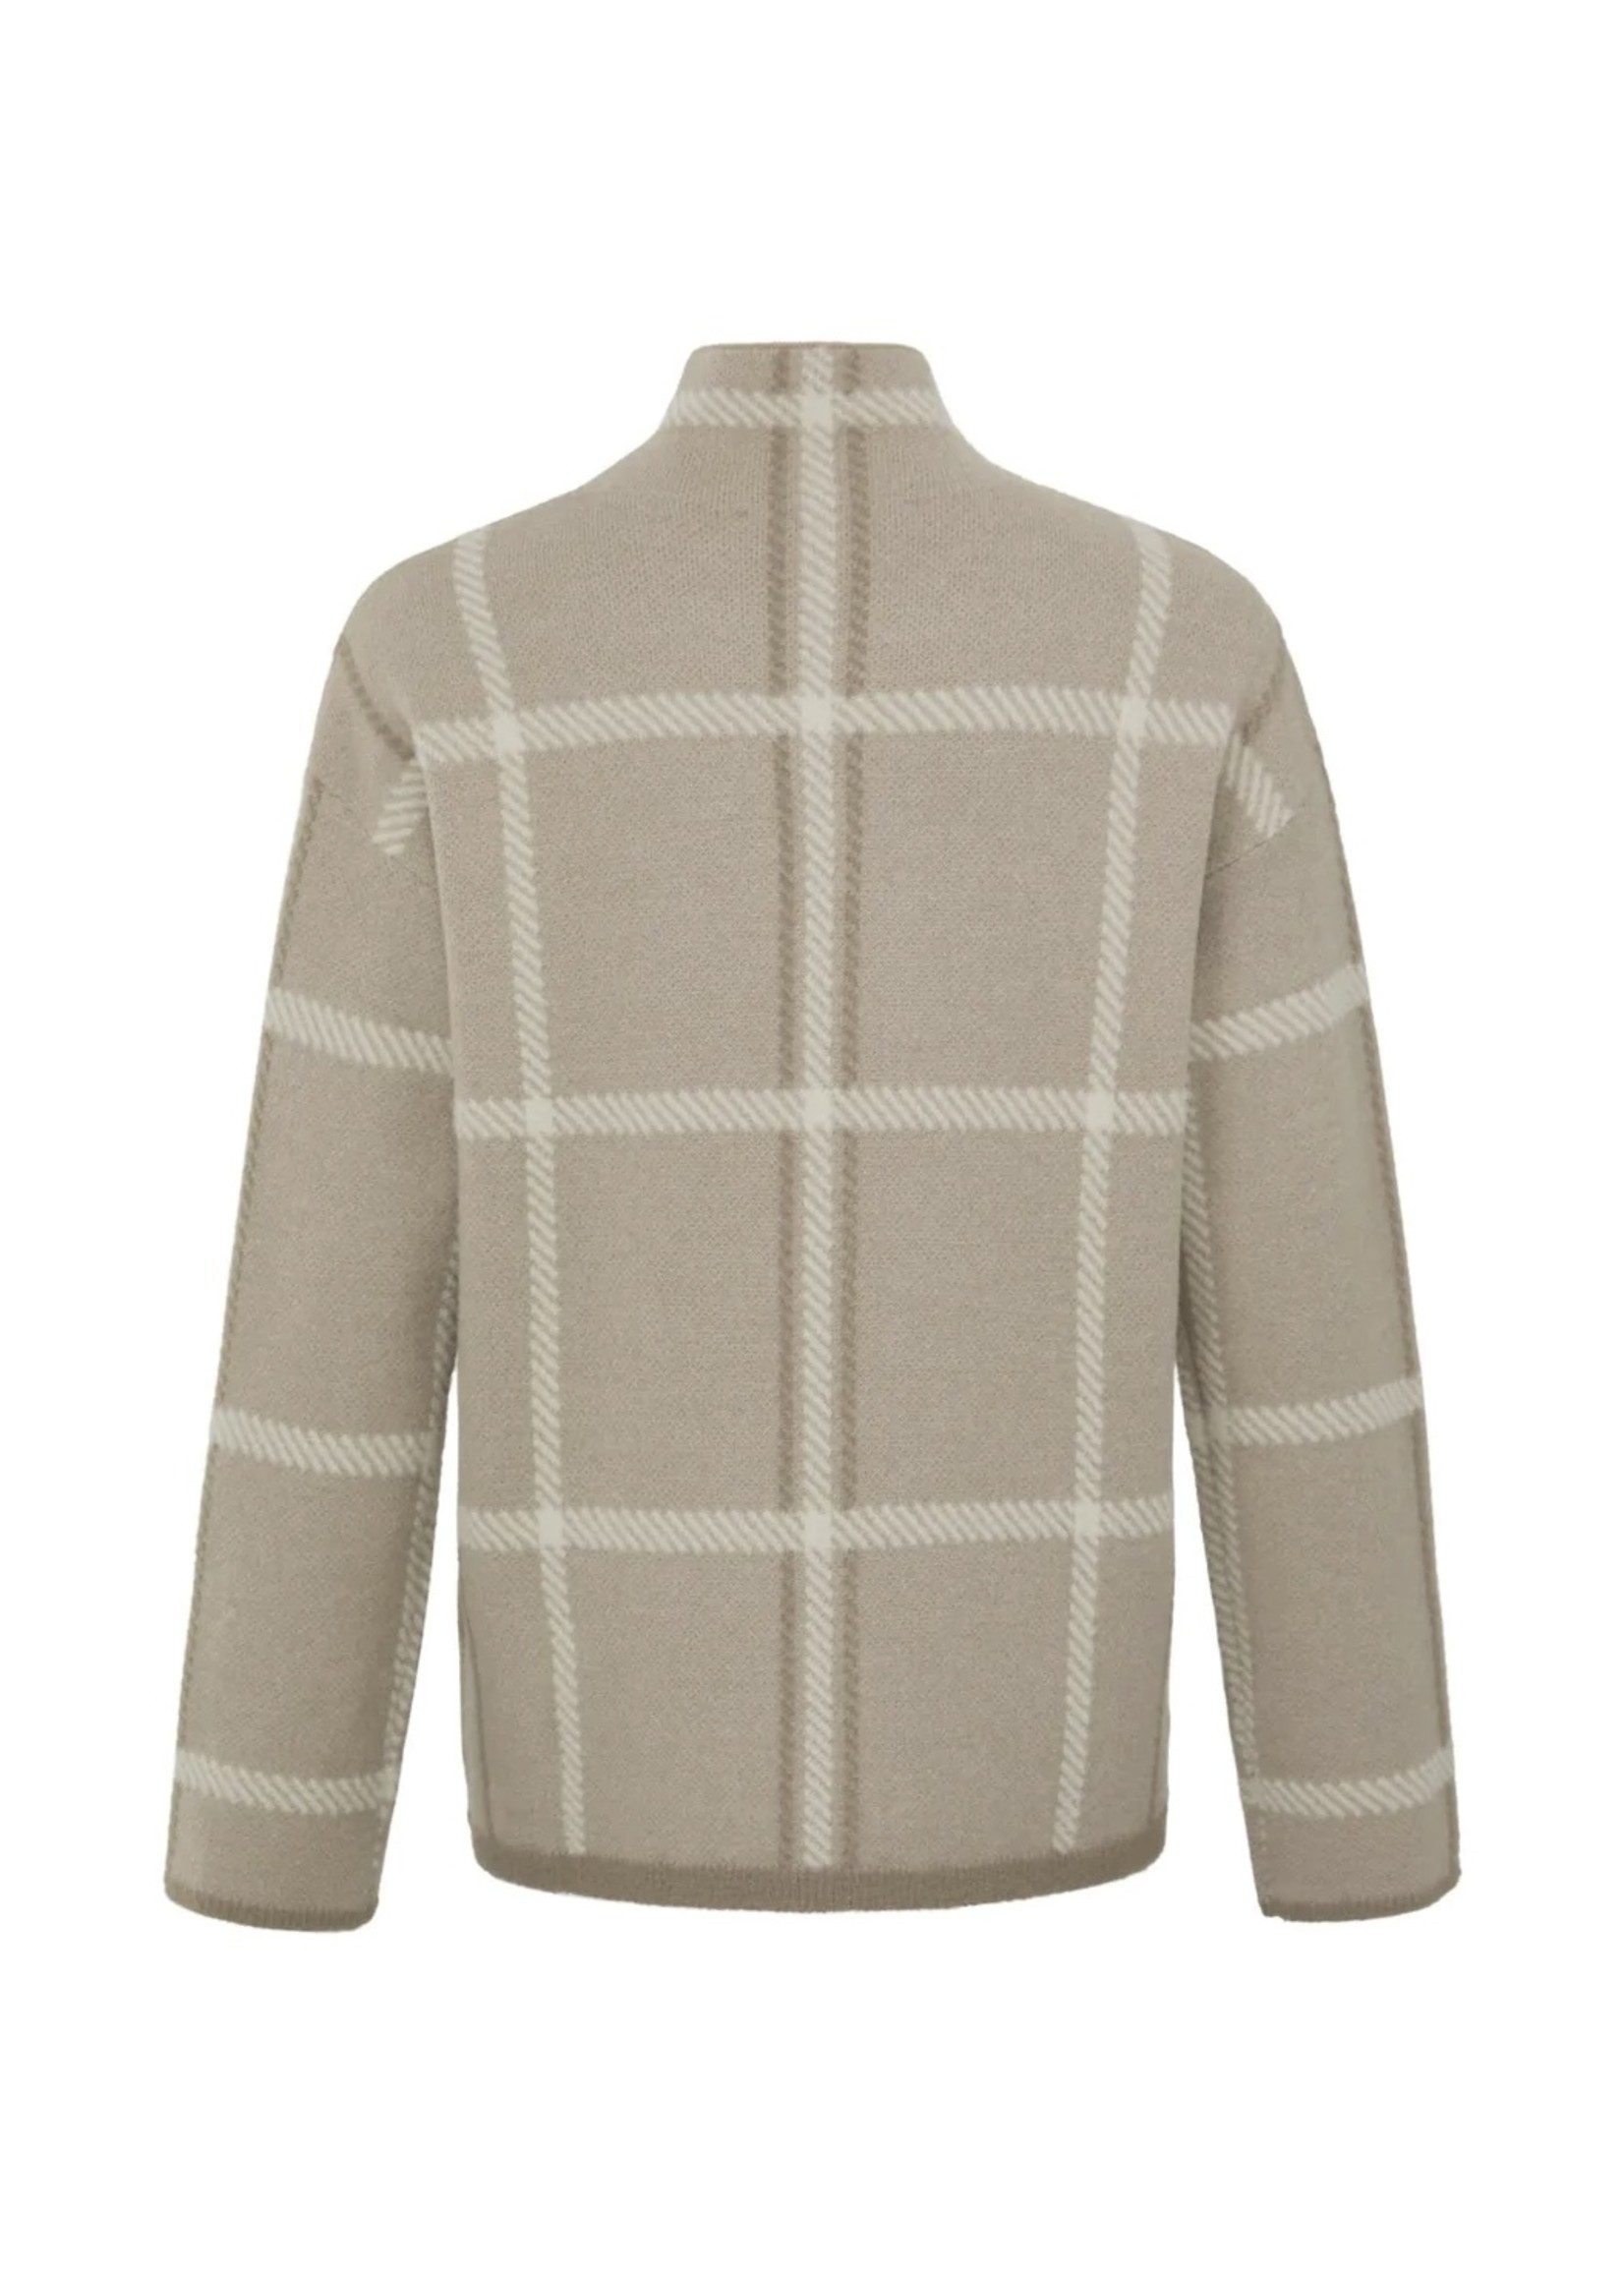 YAYA Yaya - Turtleneck Sweater in a check pattern with long sleeves